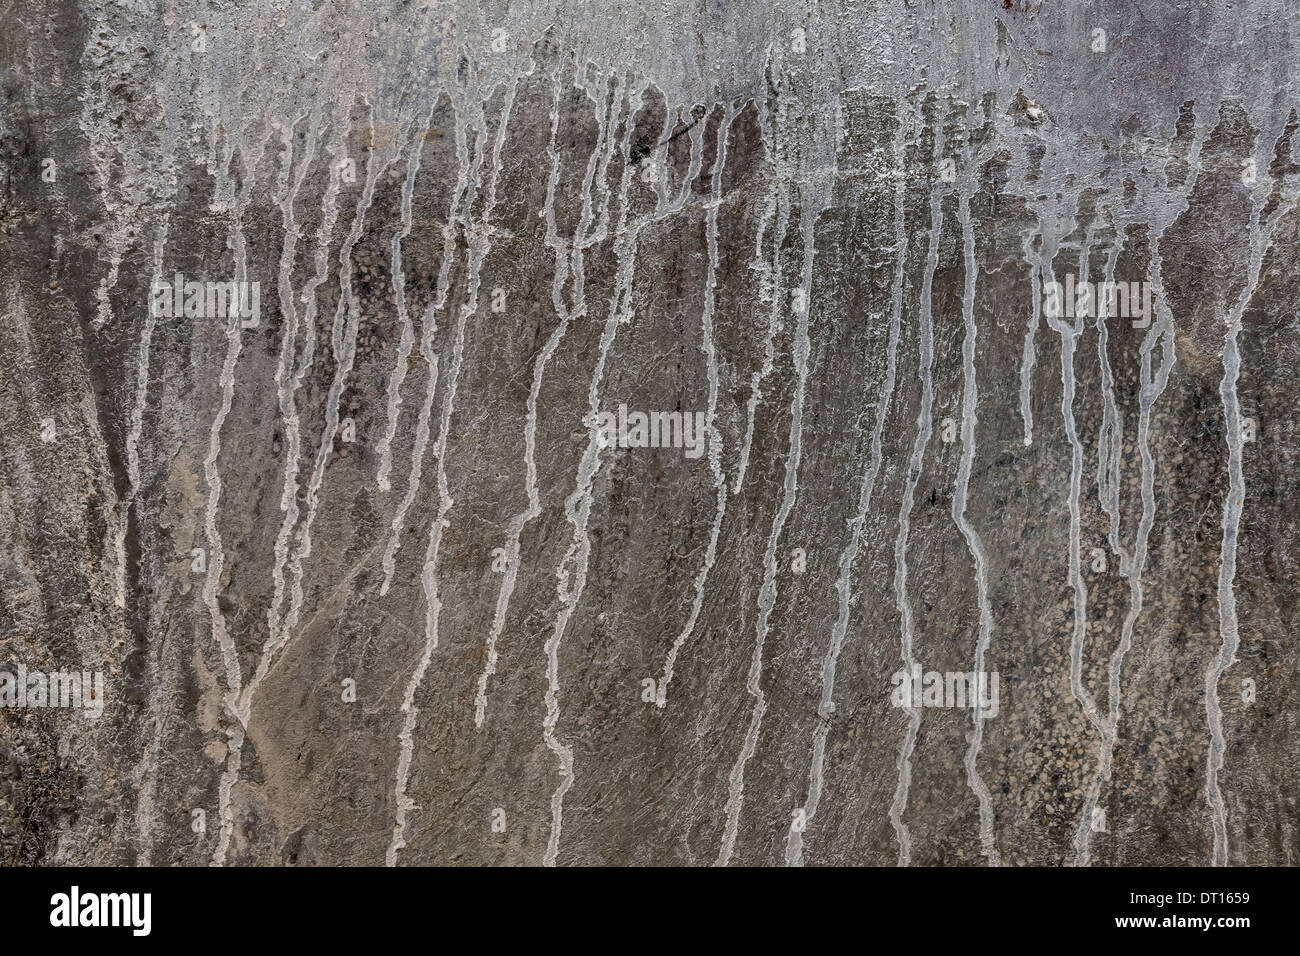 India, Rajasthan, Jaisalmer, plaster wall, drip stains Stock Photo